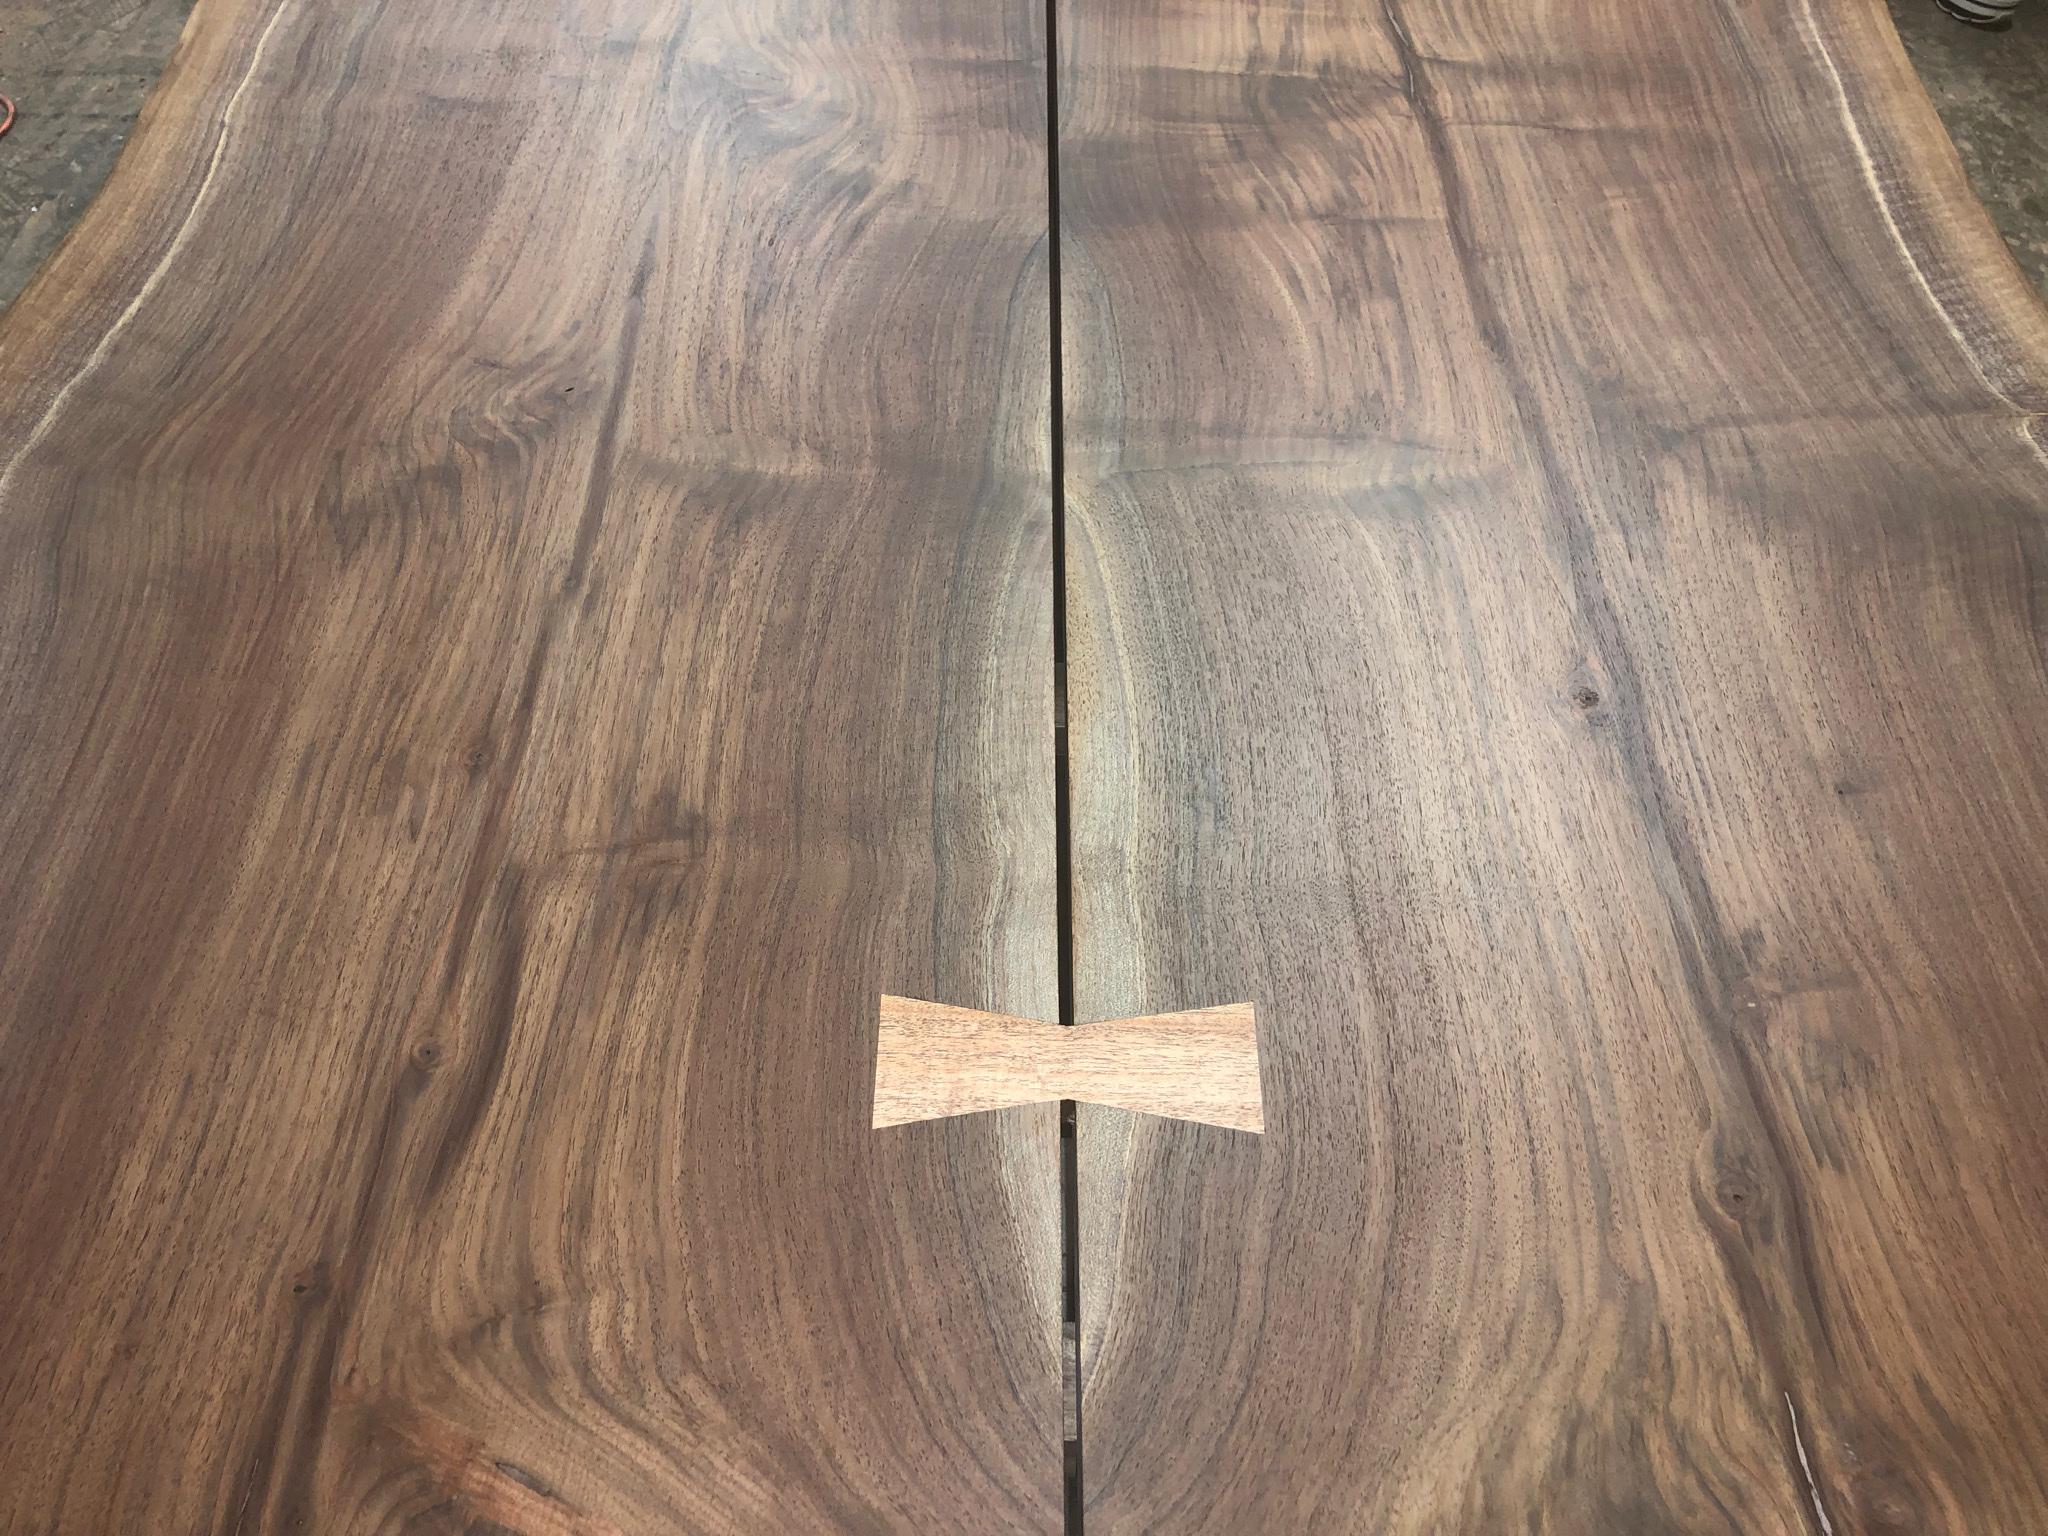 walnut slab dining table